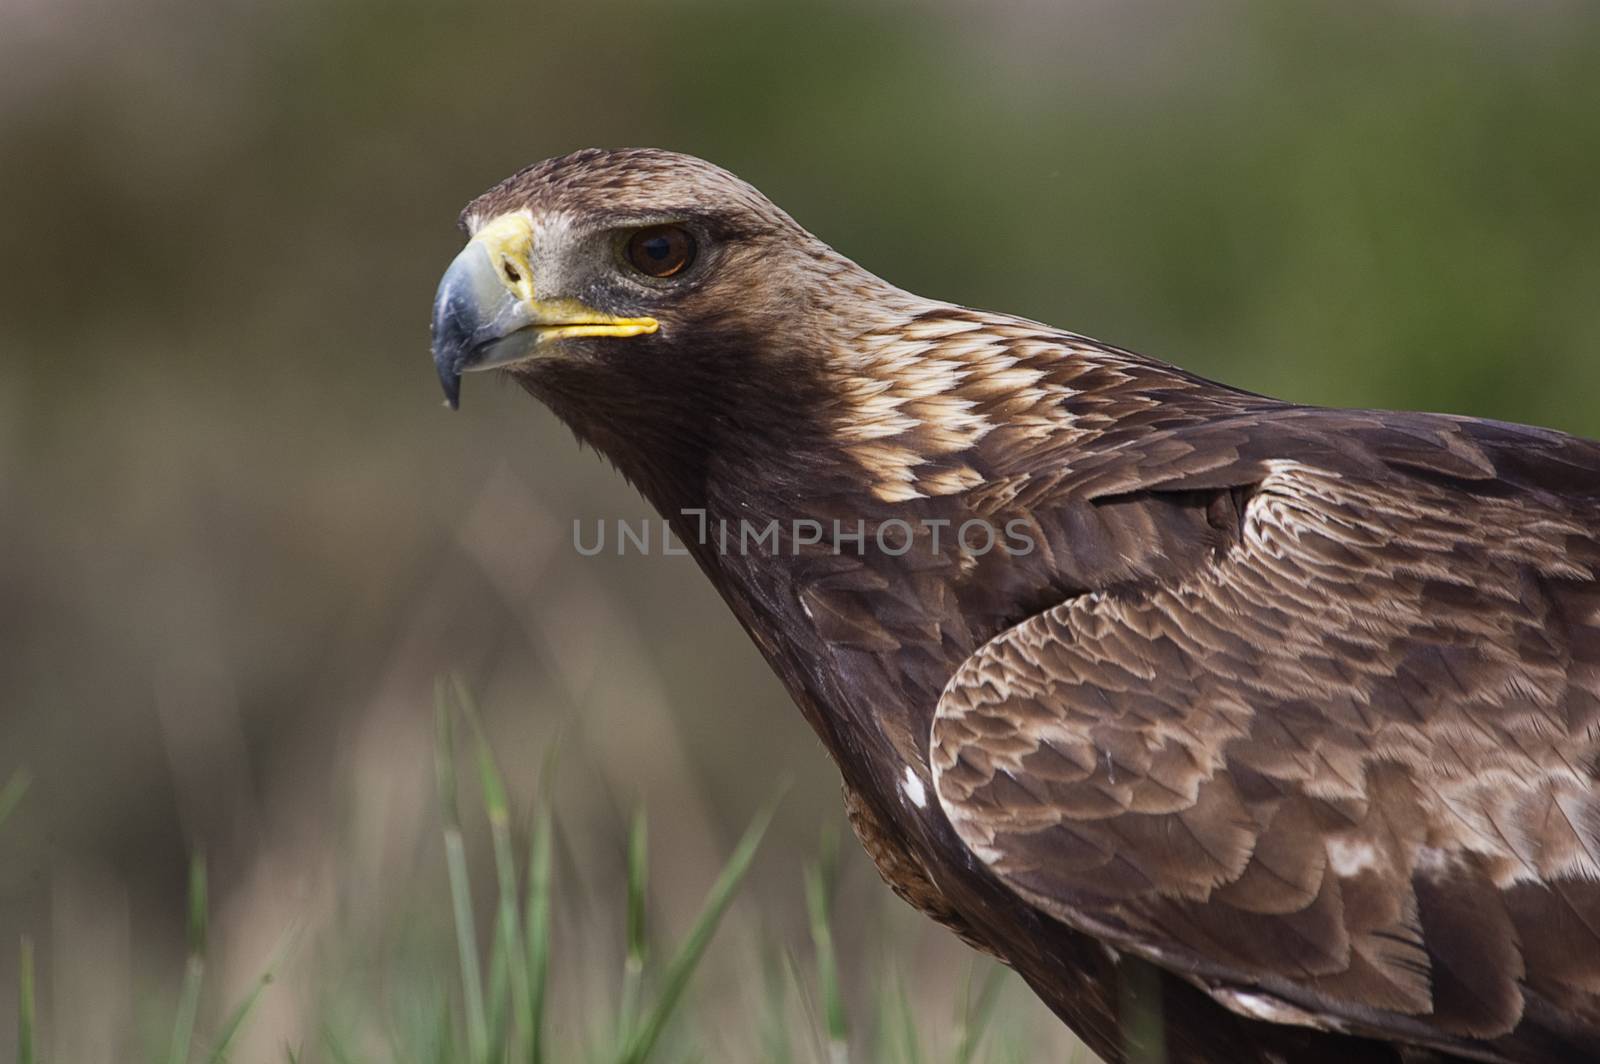 golden eagle (Aquila chrysaetos), portrait by jalonsohu@gmail.com